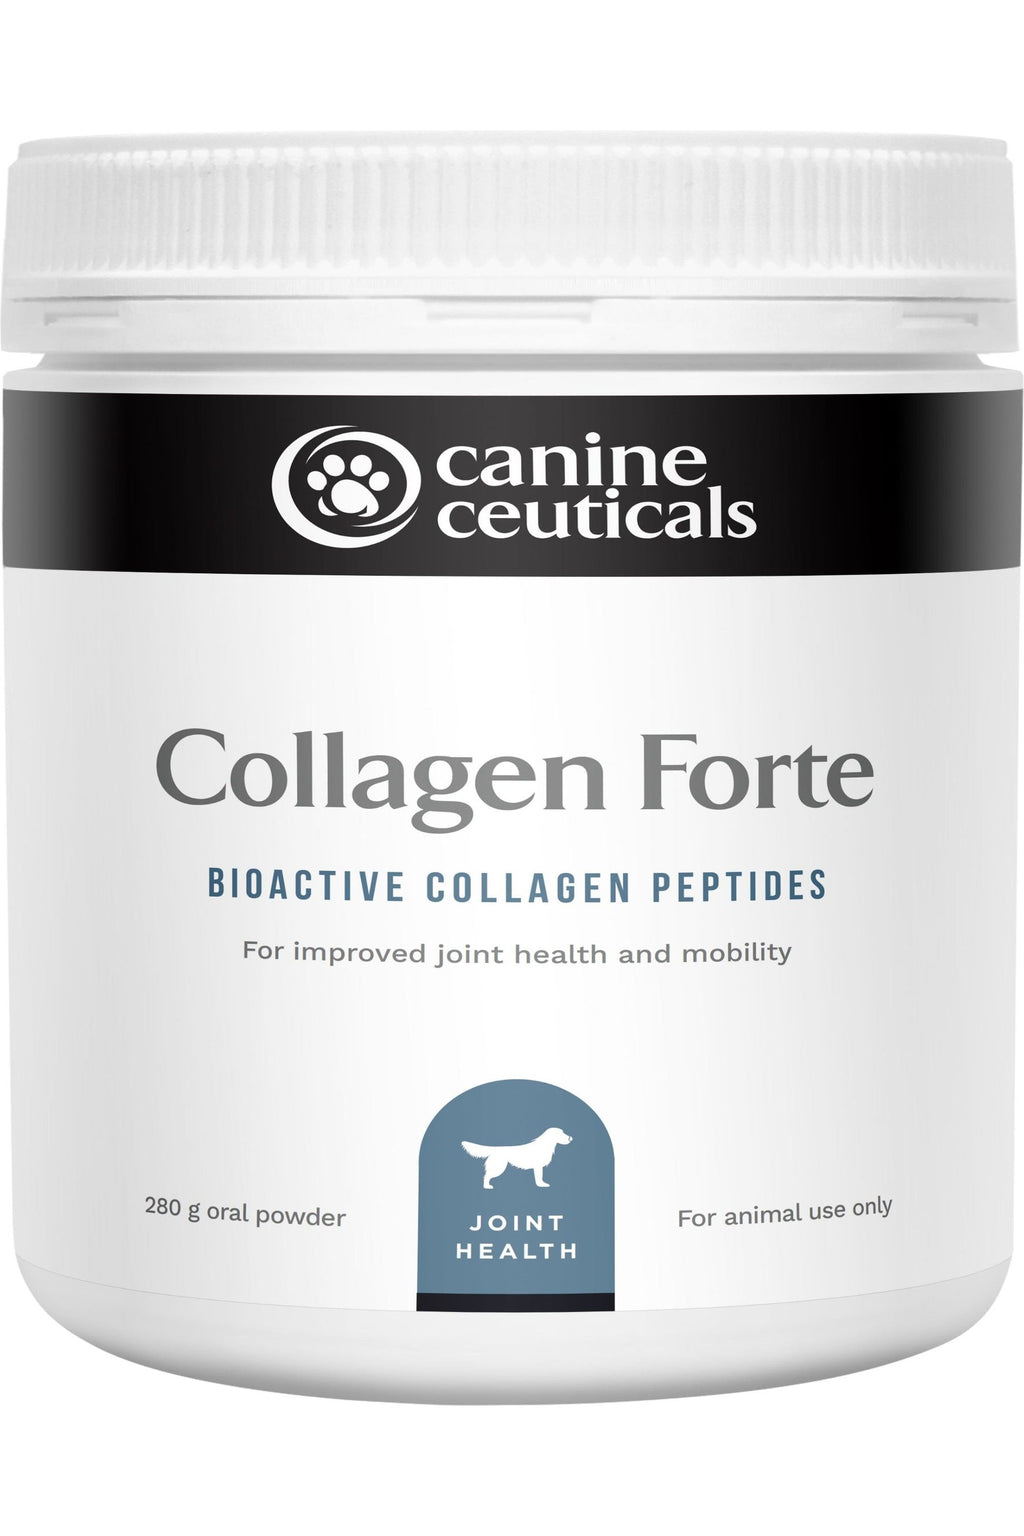 CanineCeuticals - Collagen Forte